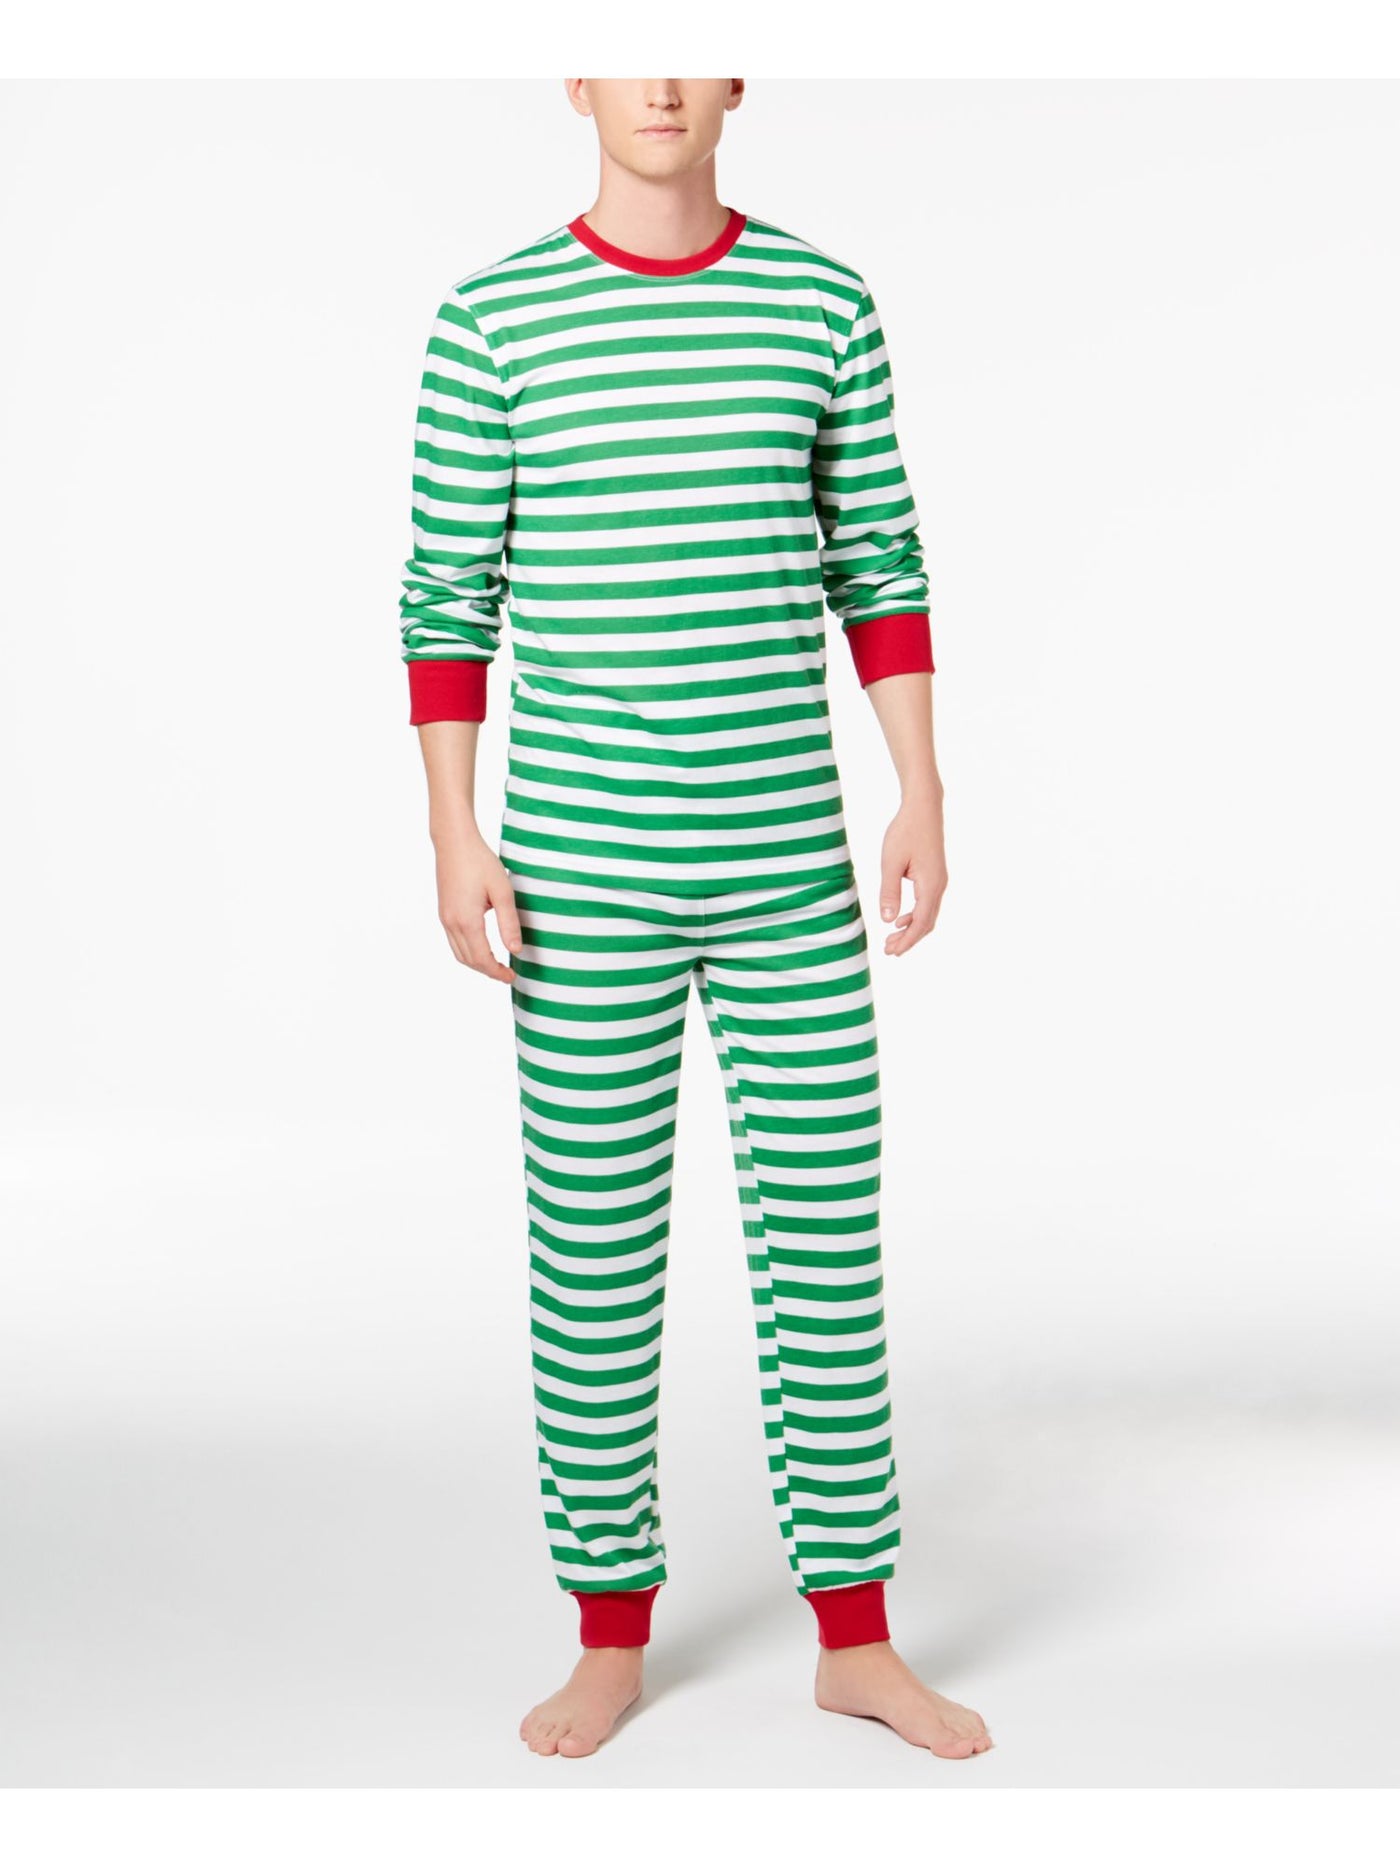 FAMILY PJs Mens Green Striped Drawstring Long Sleeve T-Shirt Top Cuffed Pants Pajamas L